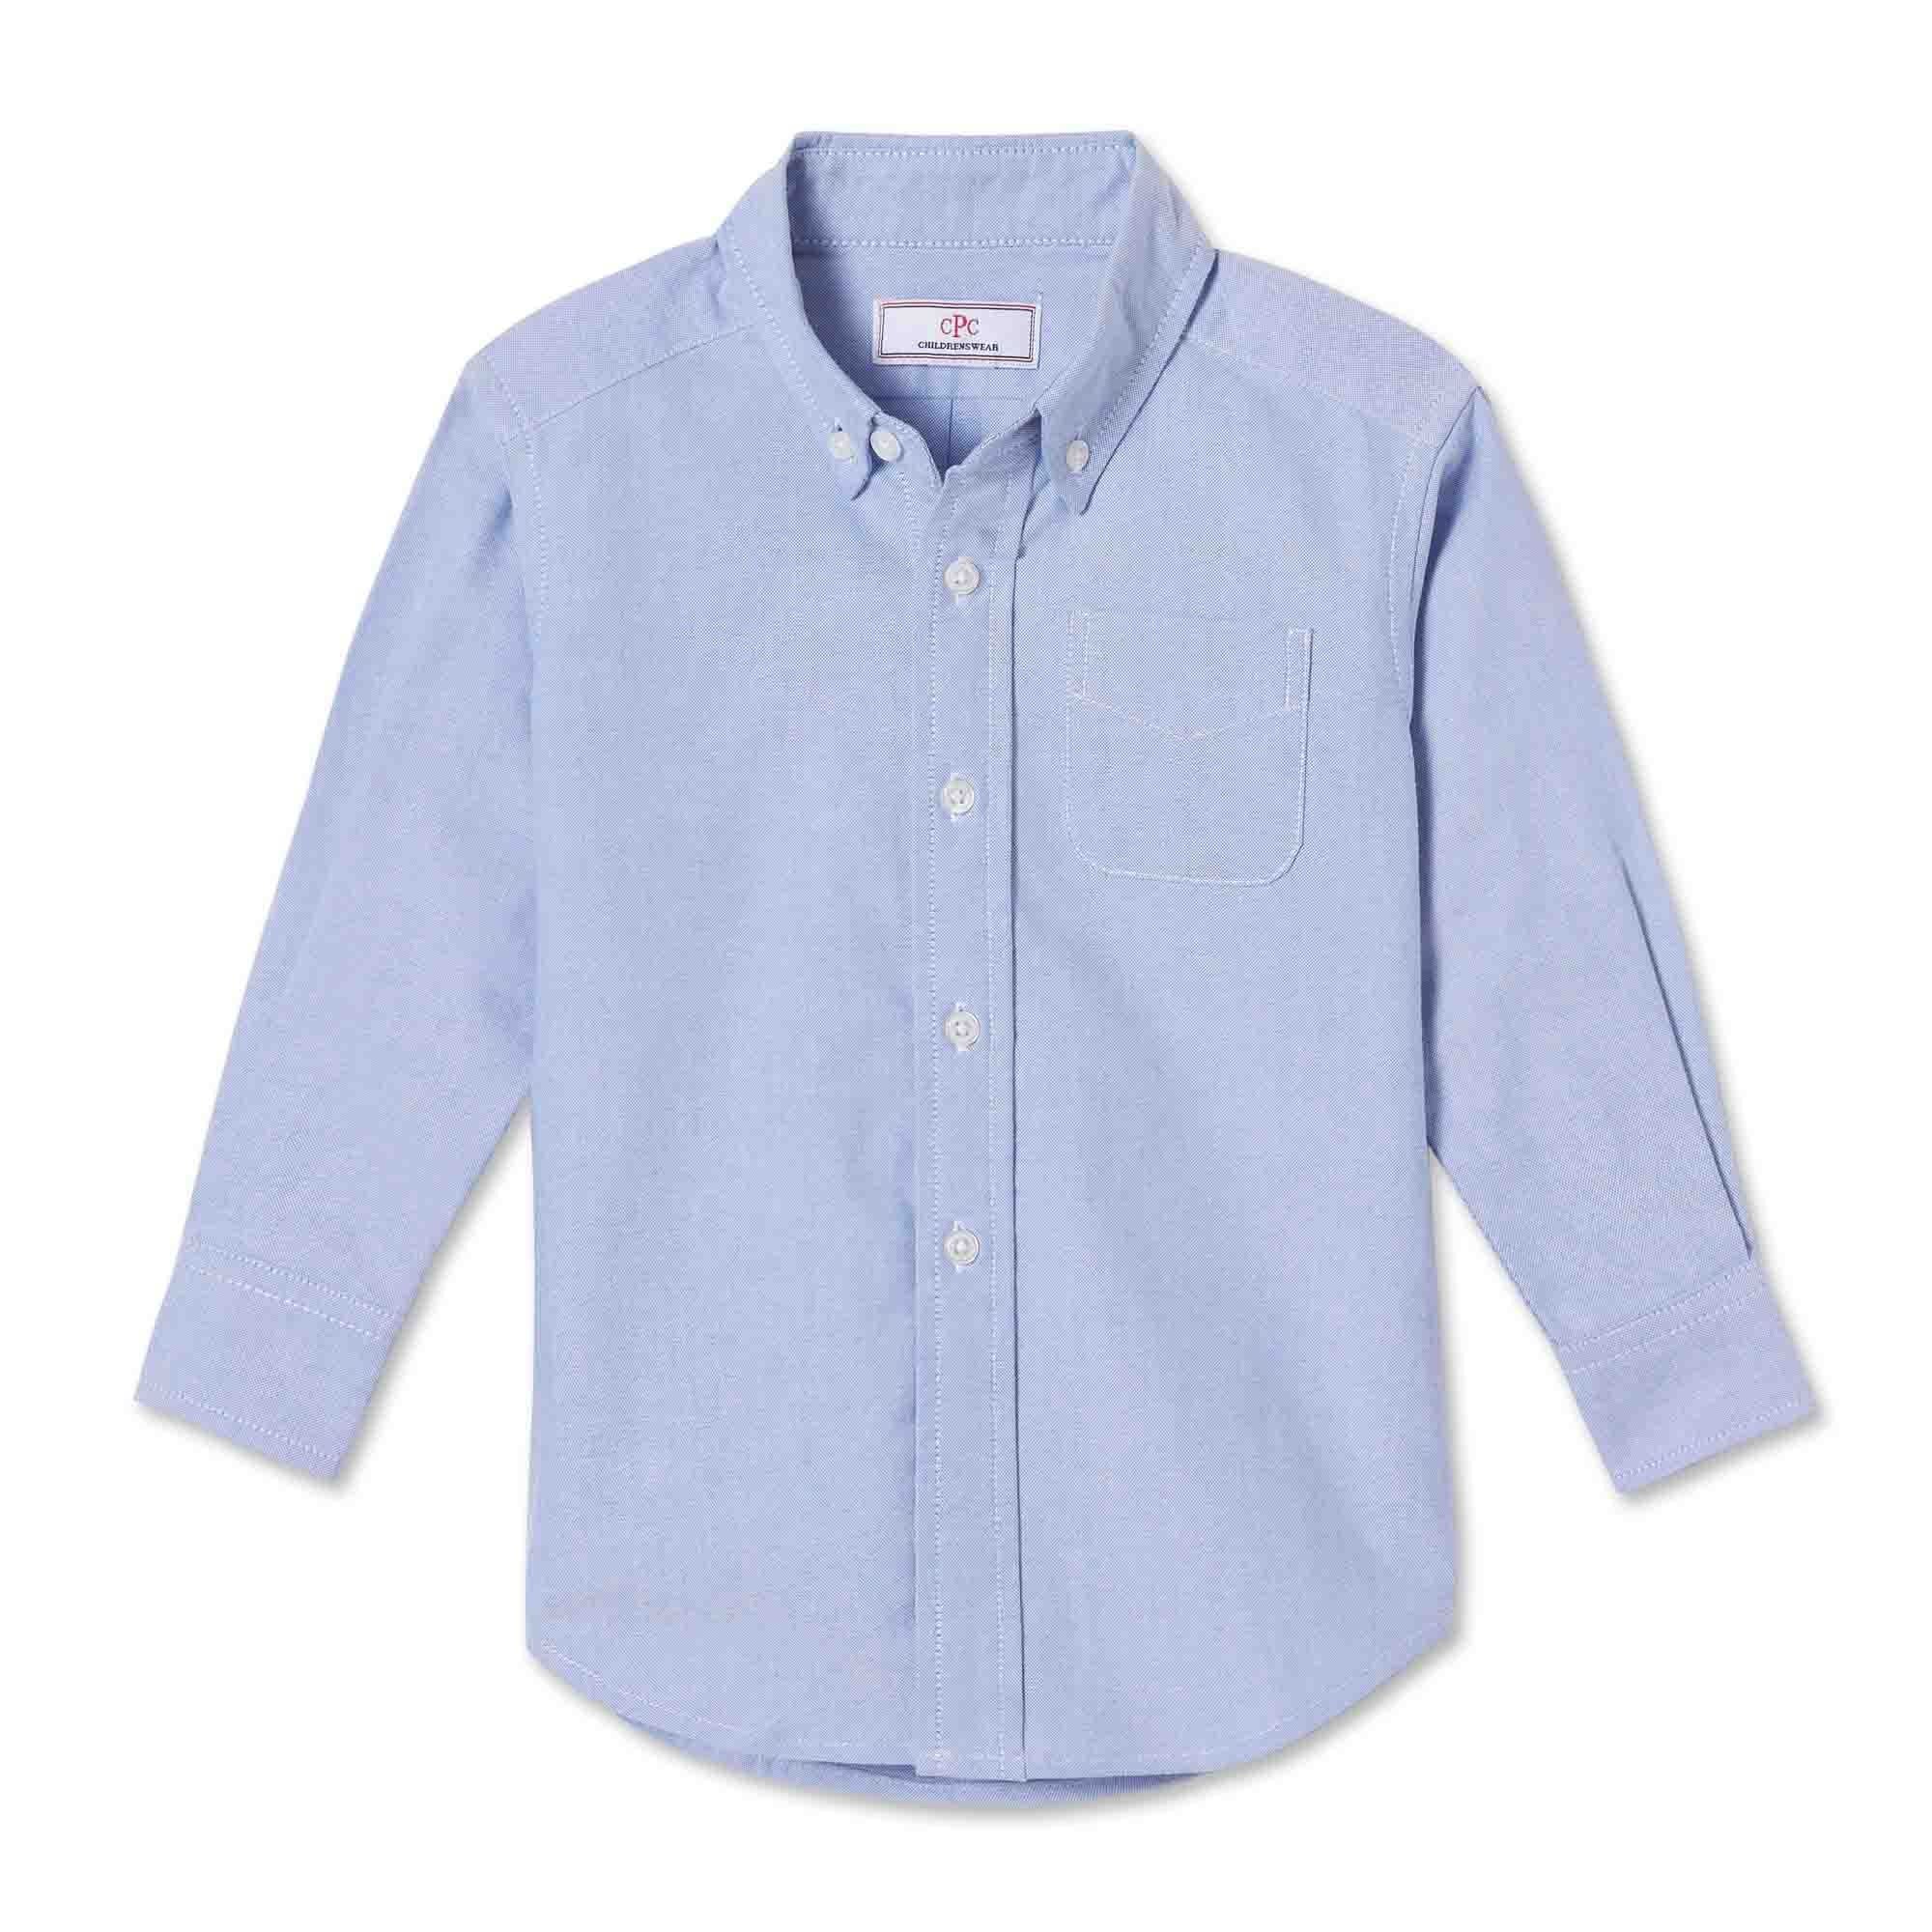 Button Shirts Cheap, Preppy Clothing Cheap